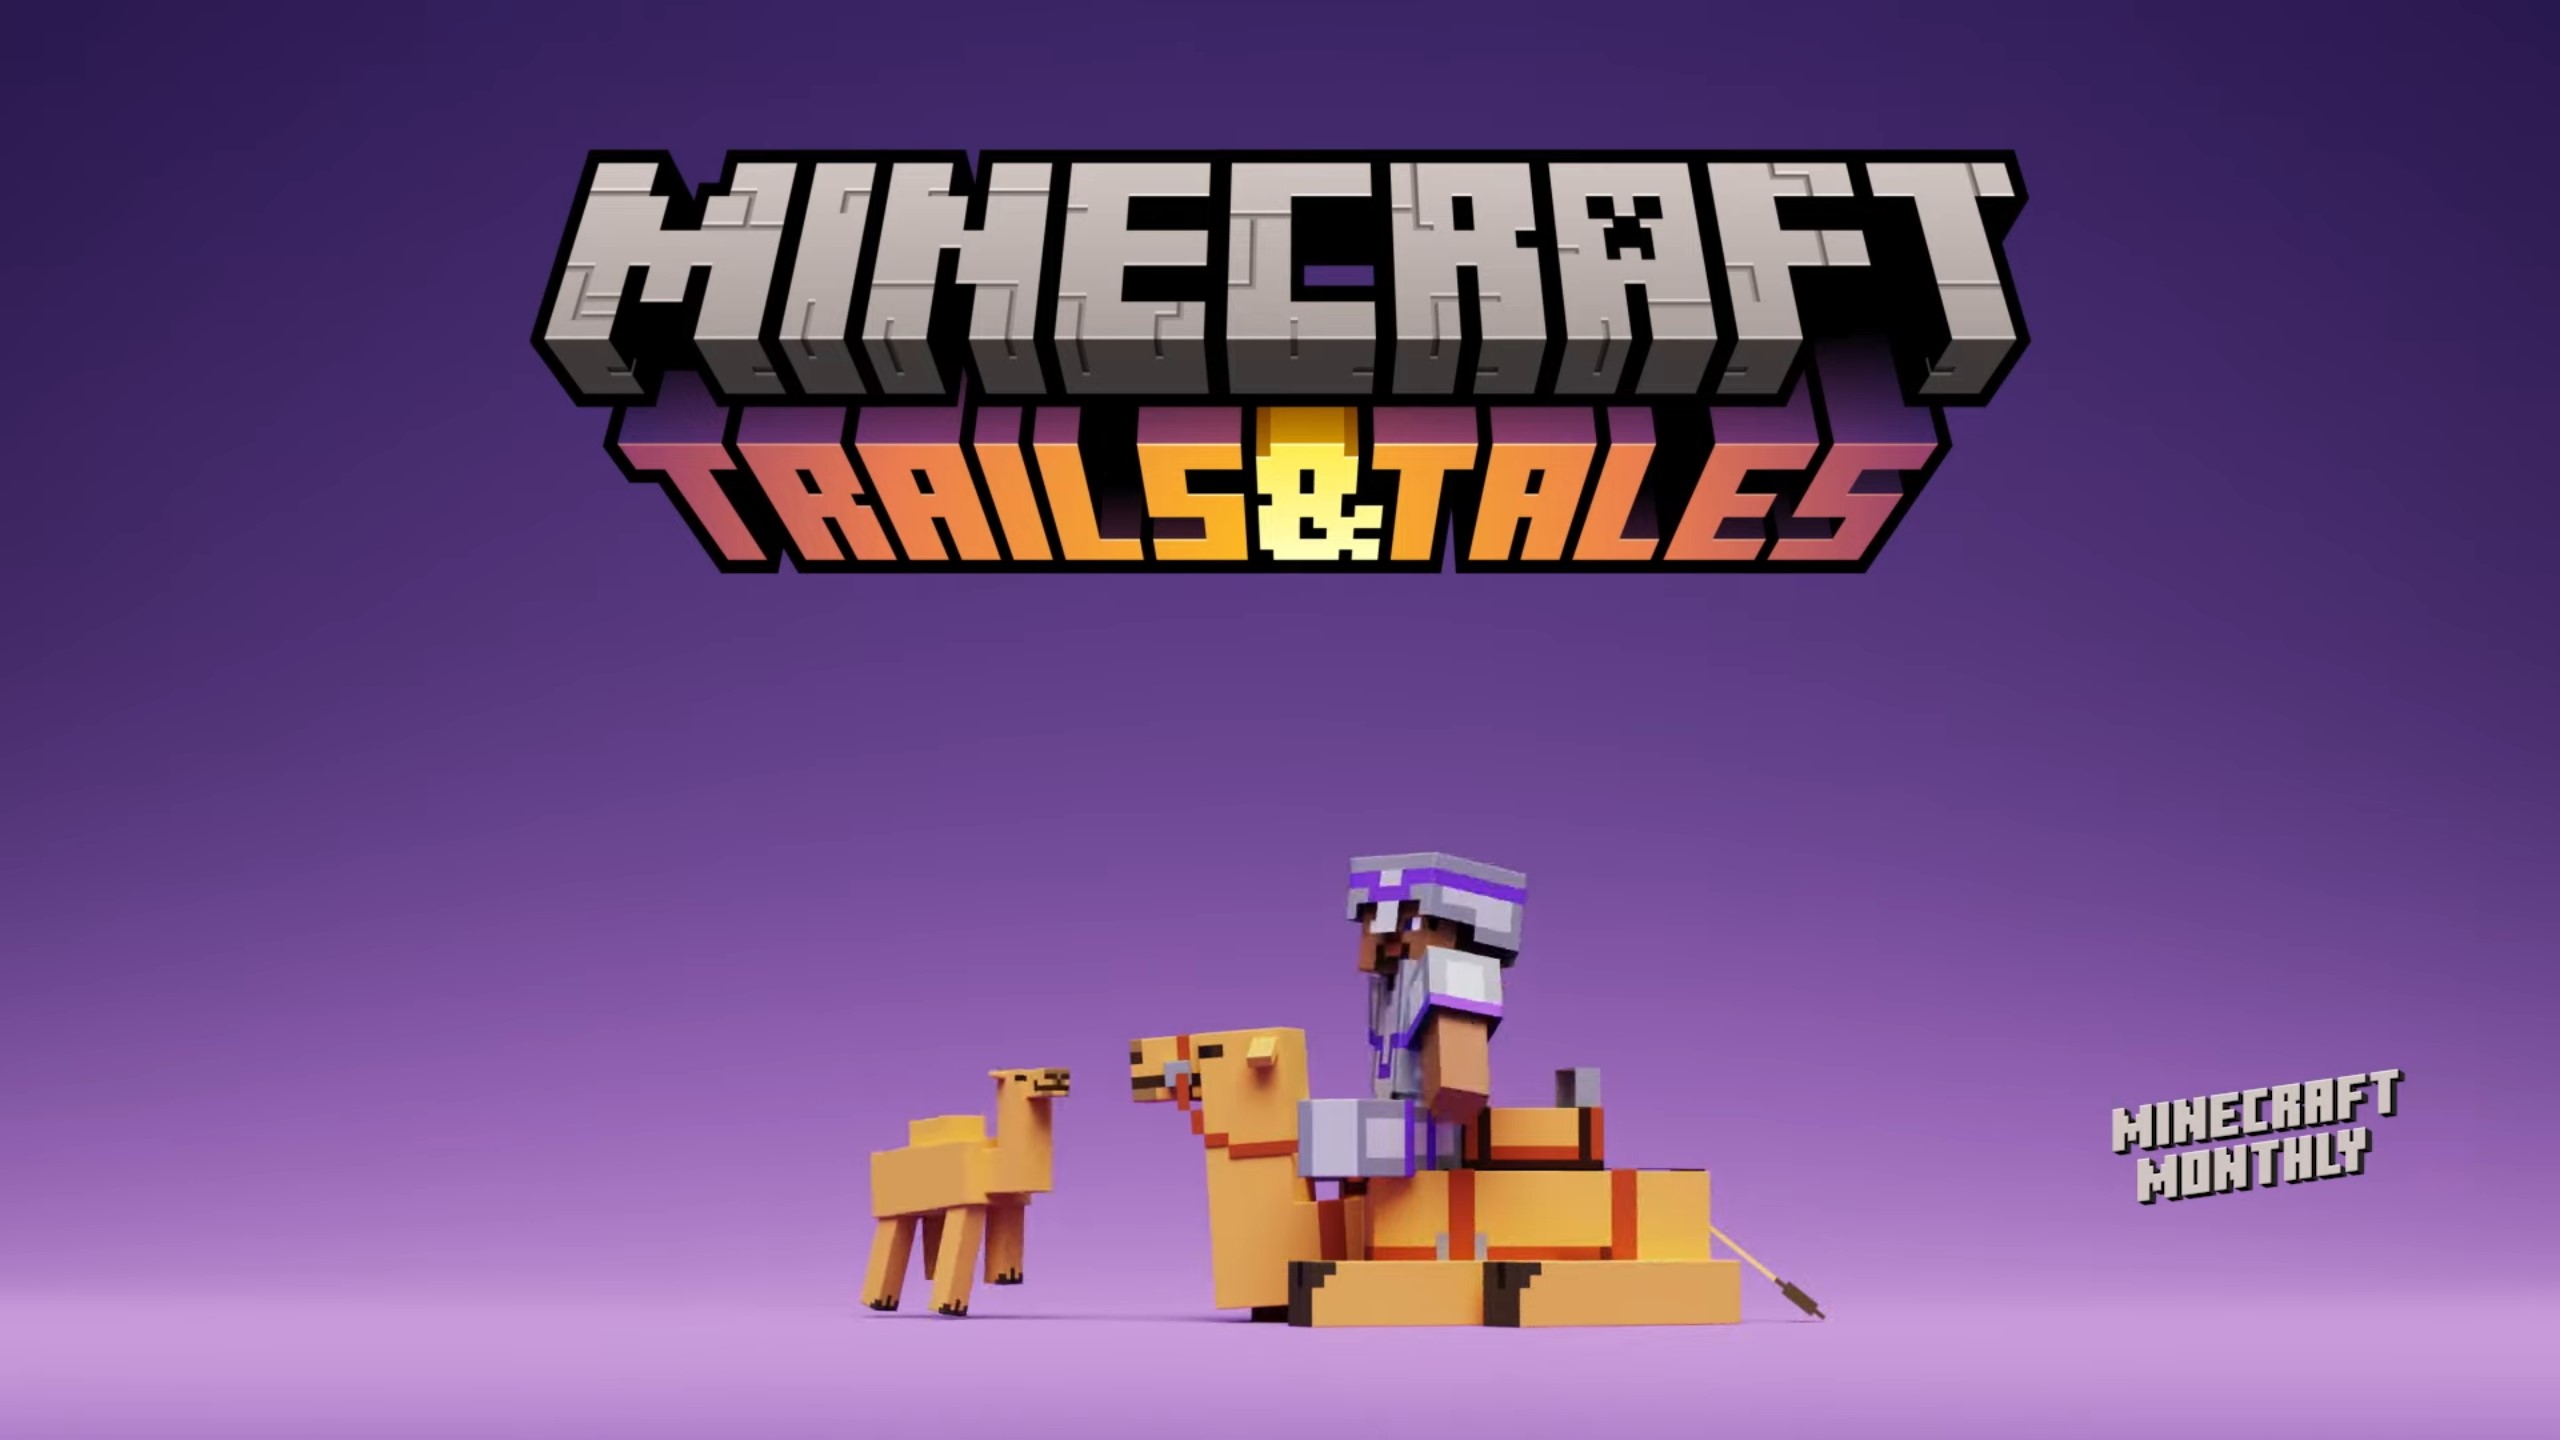 🐫 Minecraft отримав велике оновлення Trails & Tales